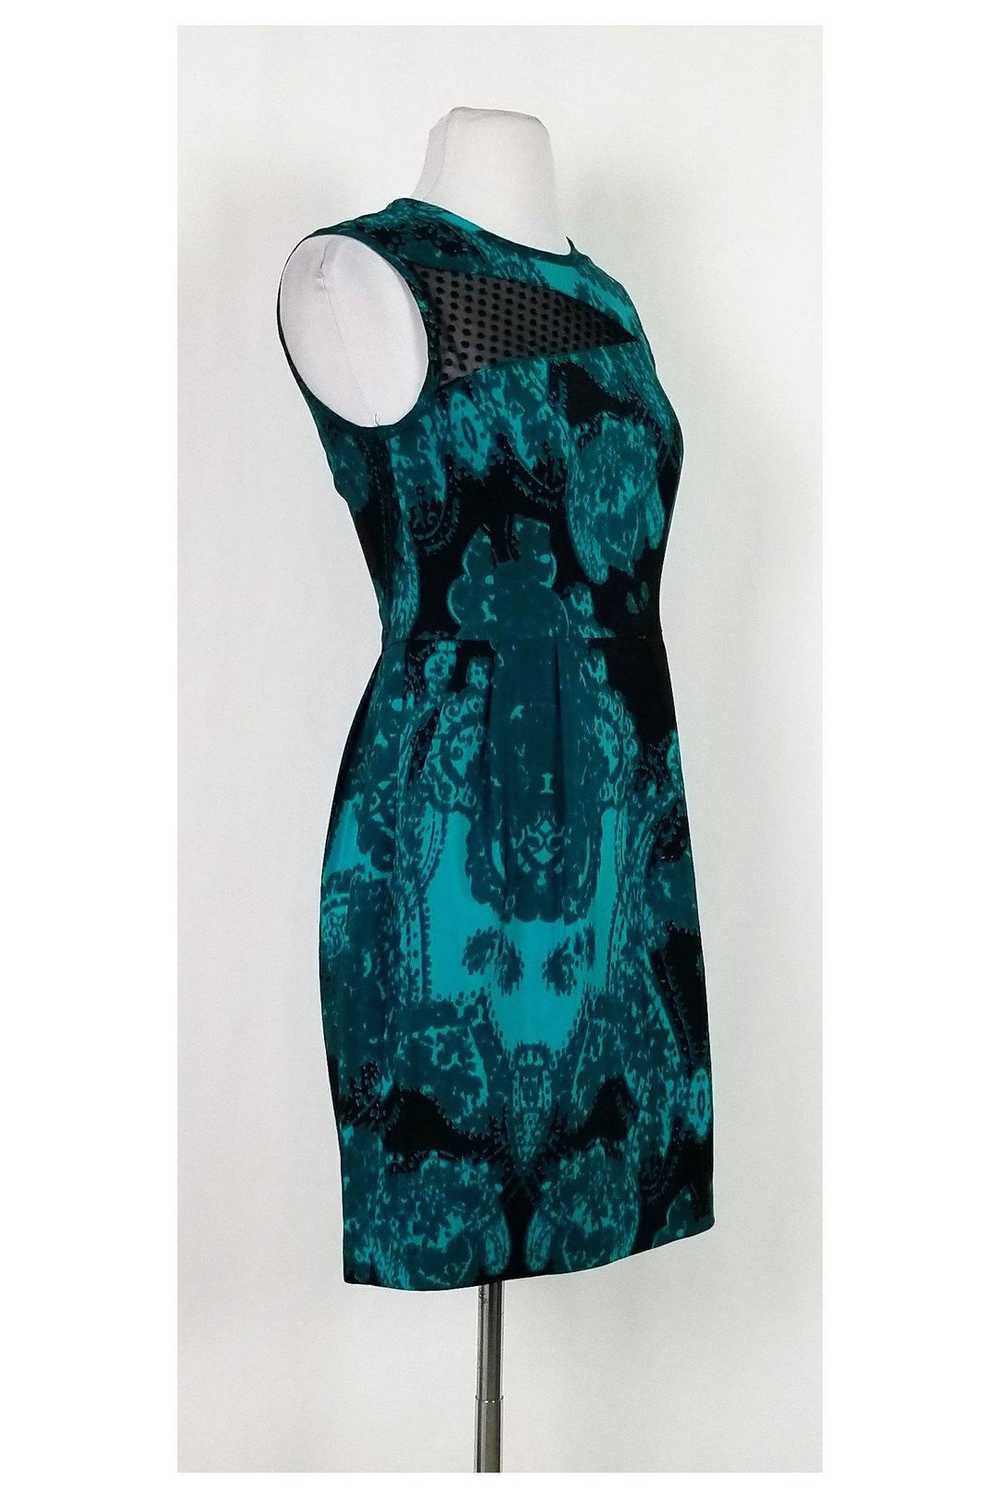 Nanette Lepore - Teal Abstract Print Dress Sz 0 - image 2